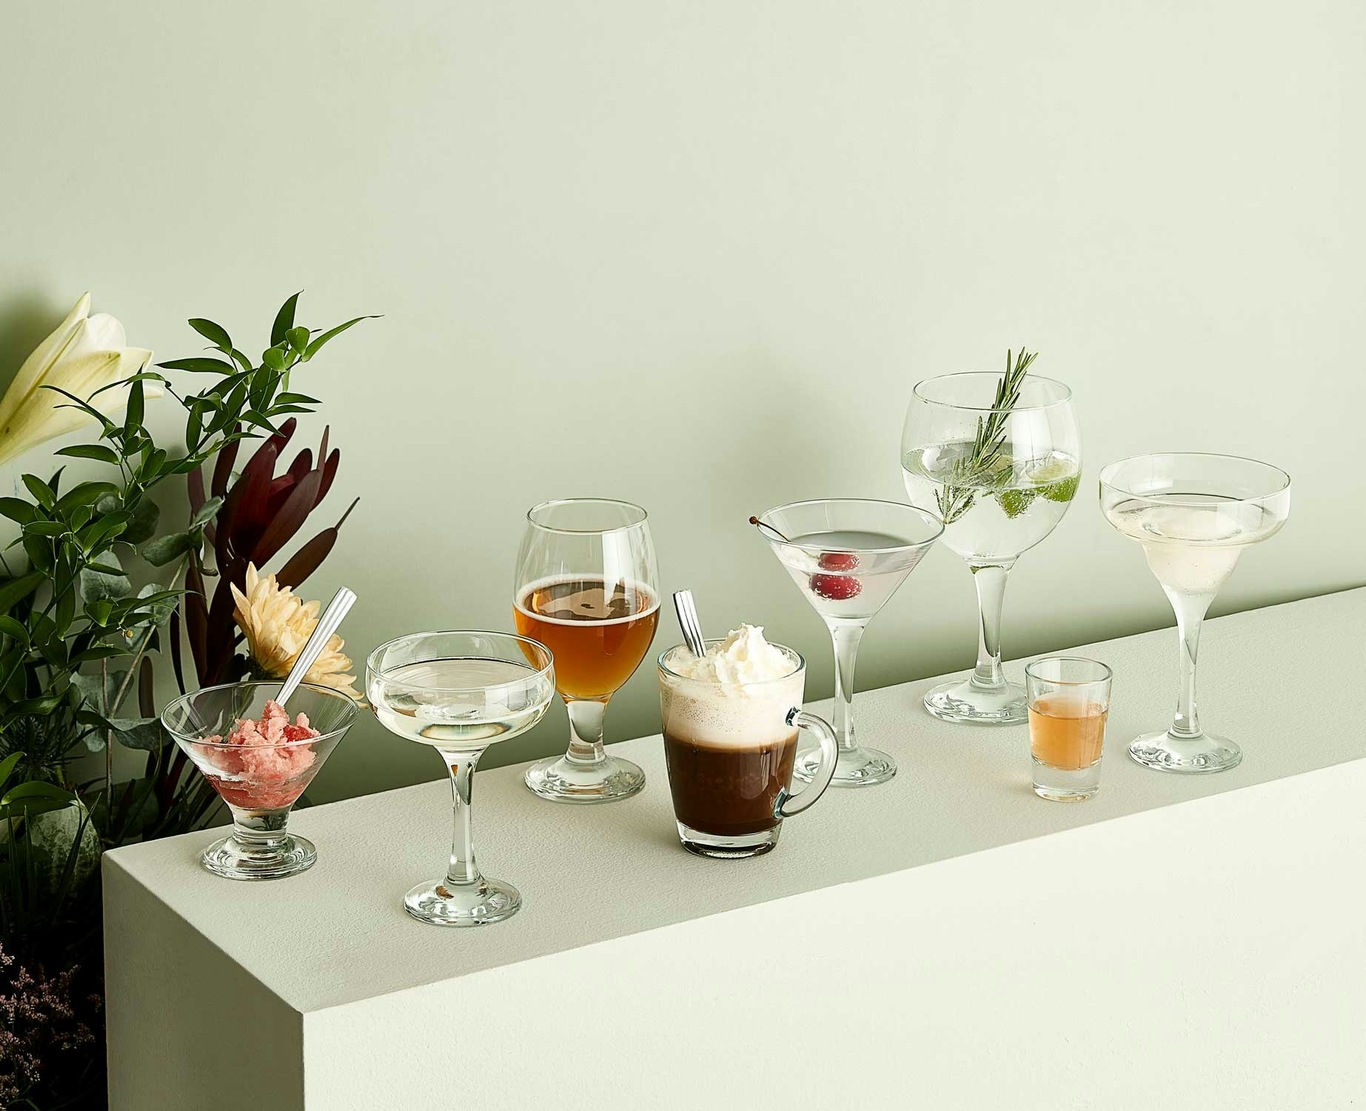 Martini Glass 25 cl, 2-pack - Riedel @ RoyalDesign